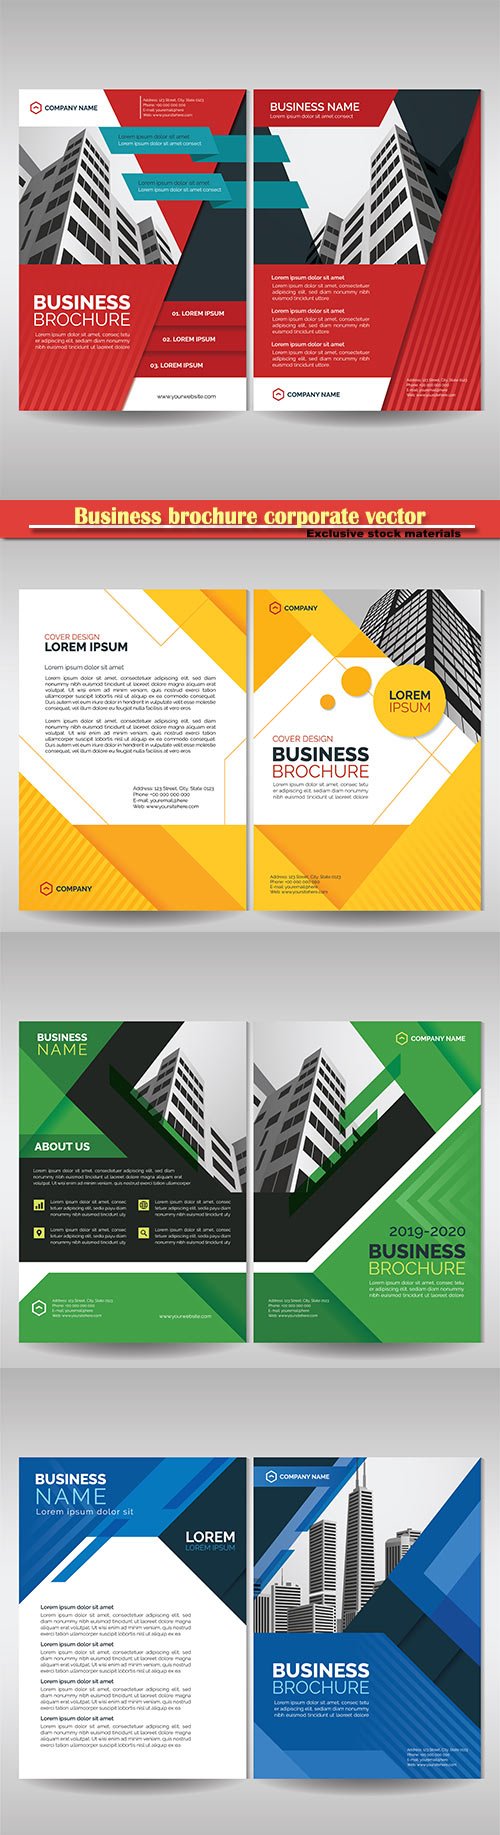 Business brochure corporate vector template # 37